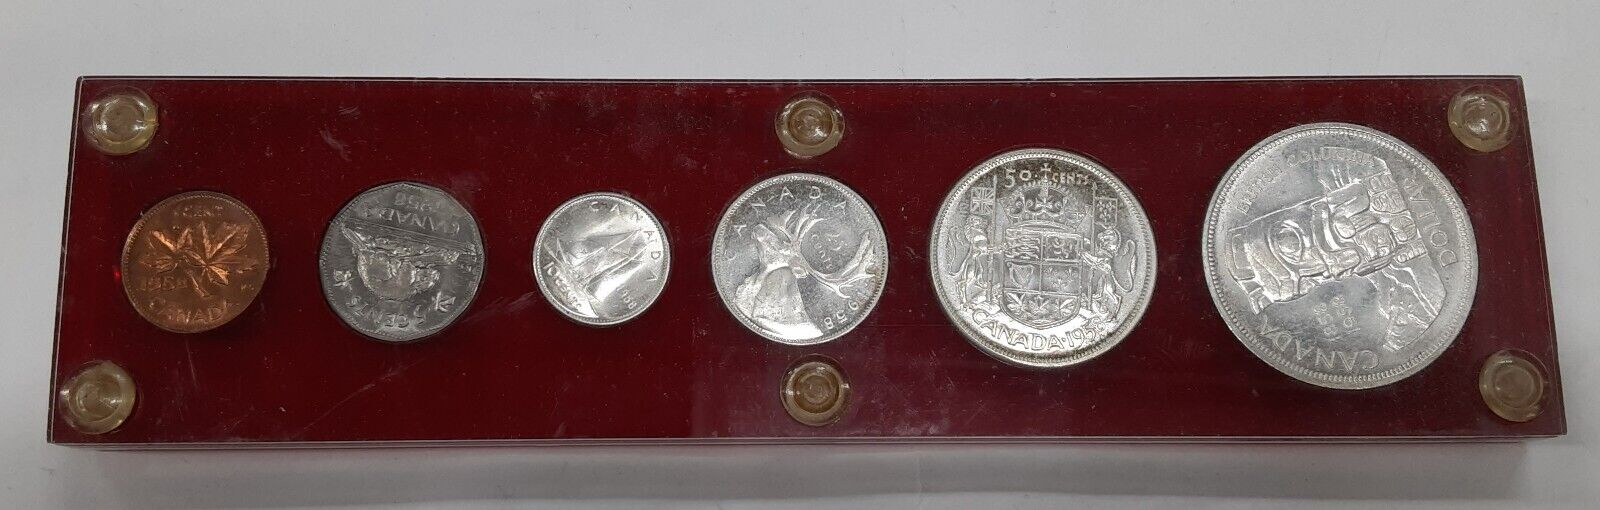 1958 Canada 6 Coin Mint Set Queen Elizabeth II BU in Red Acrylic Holder